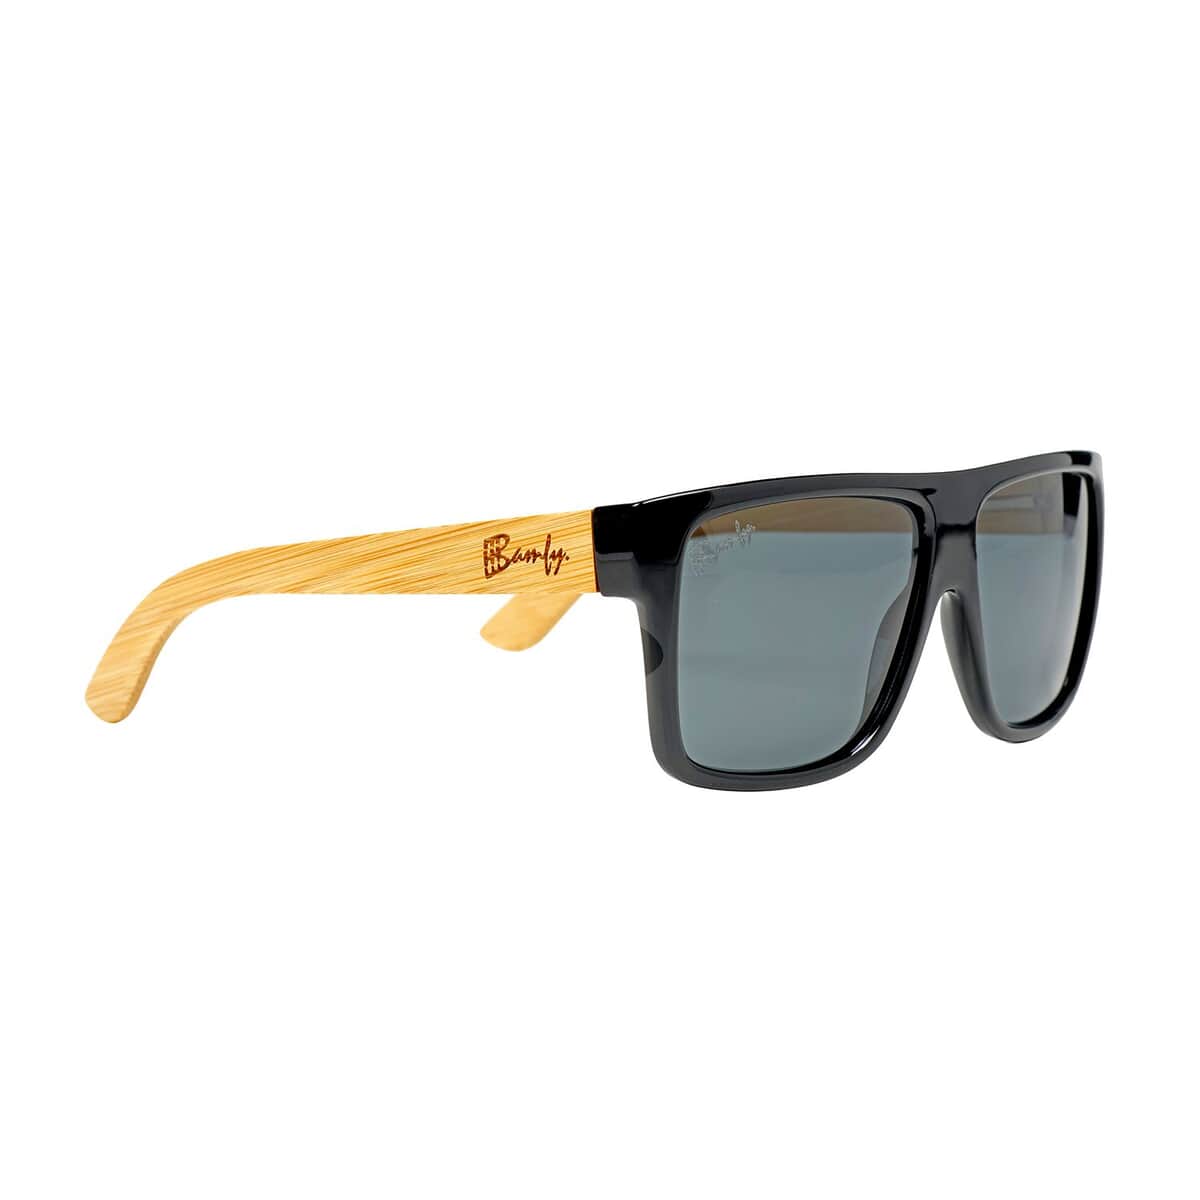 Bamfy Oakland UV400 Polarized Sunglasses with Bamboo Legs and Case -Black image number 3